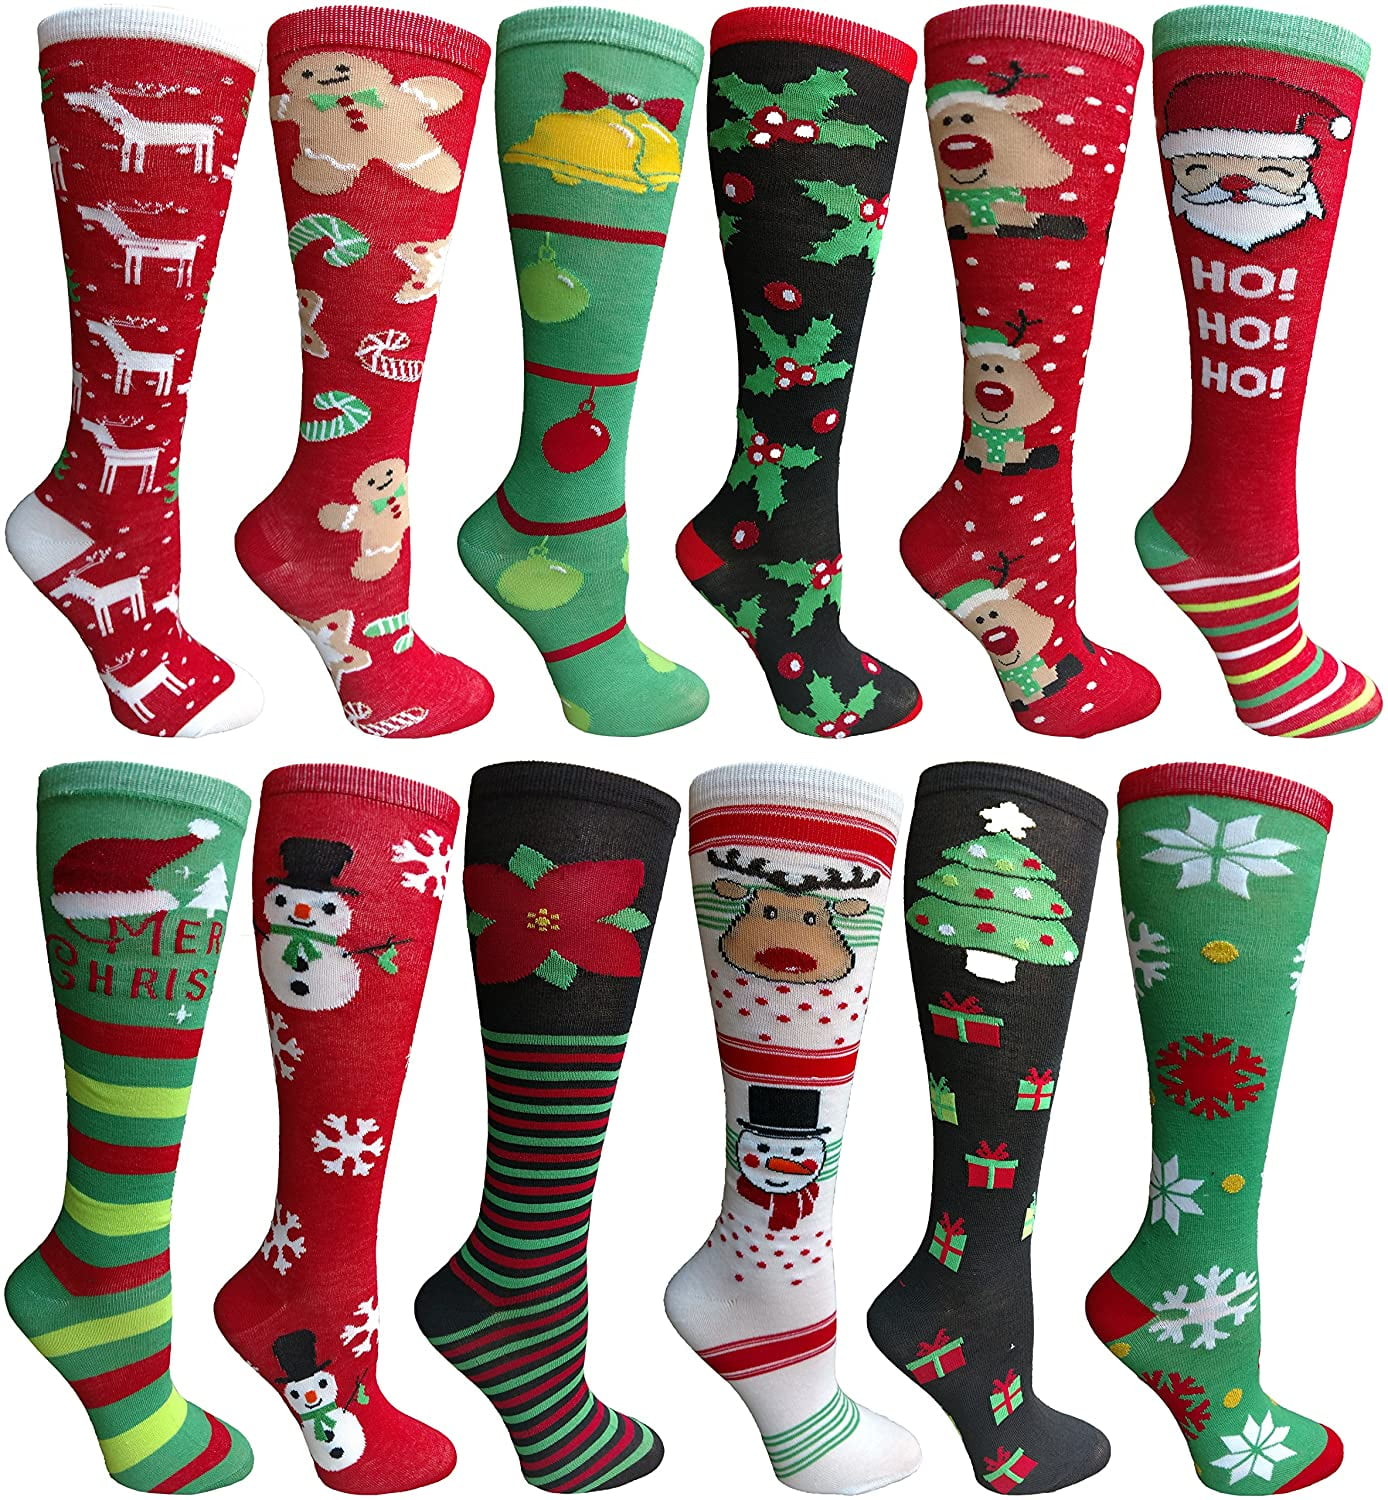 Yacht & Smith - Yacht & Smith Christmas Socks, Novelty Holiday Socks ...